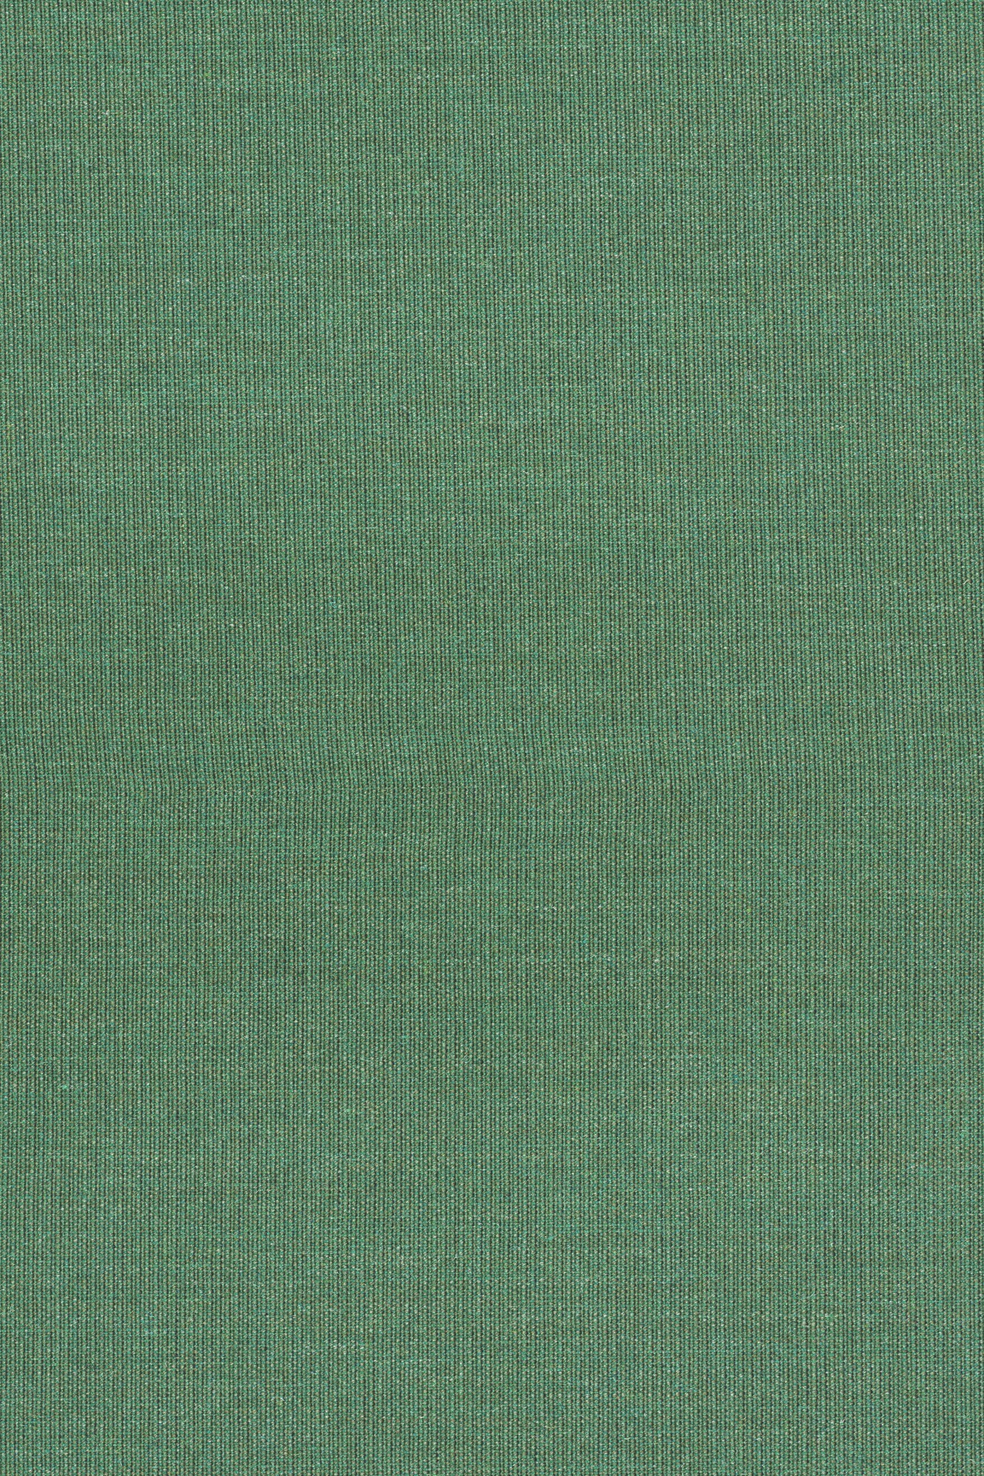 Fabric sample Canvas 2 946 green